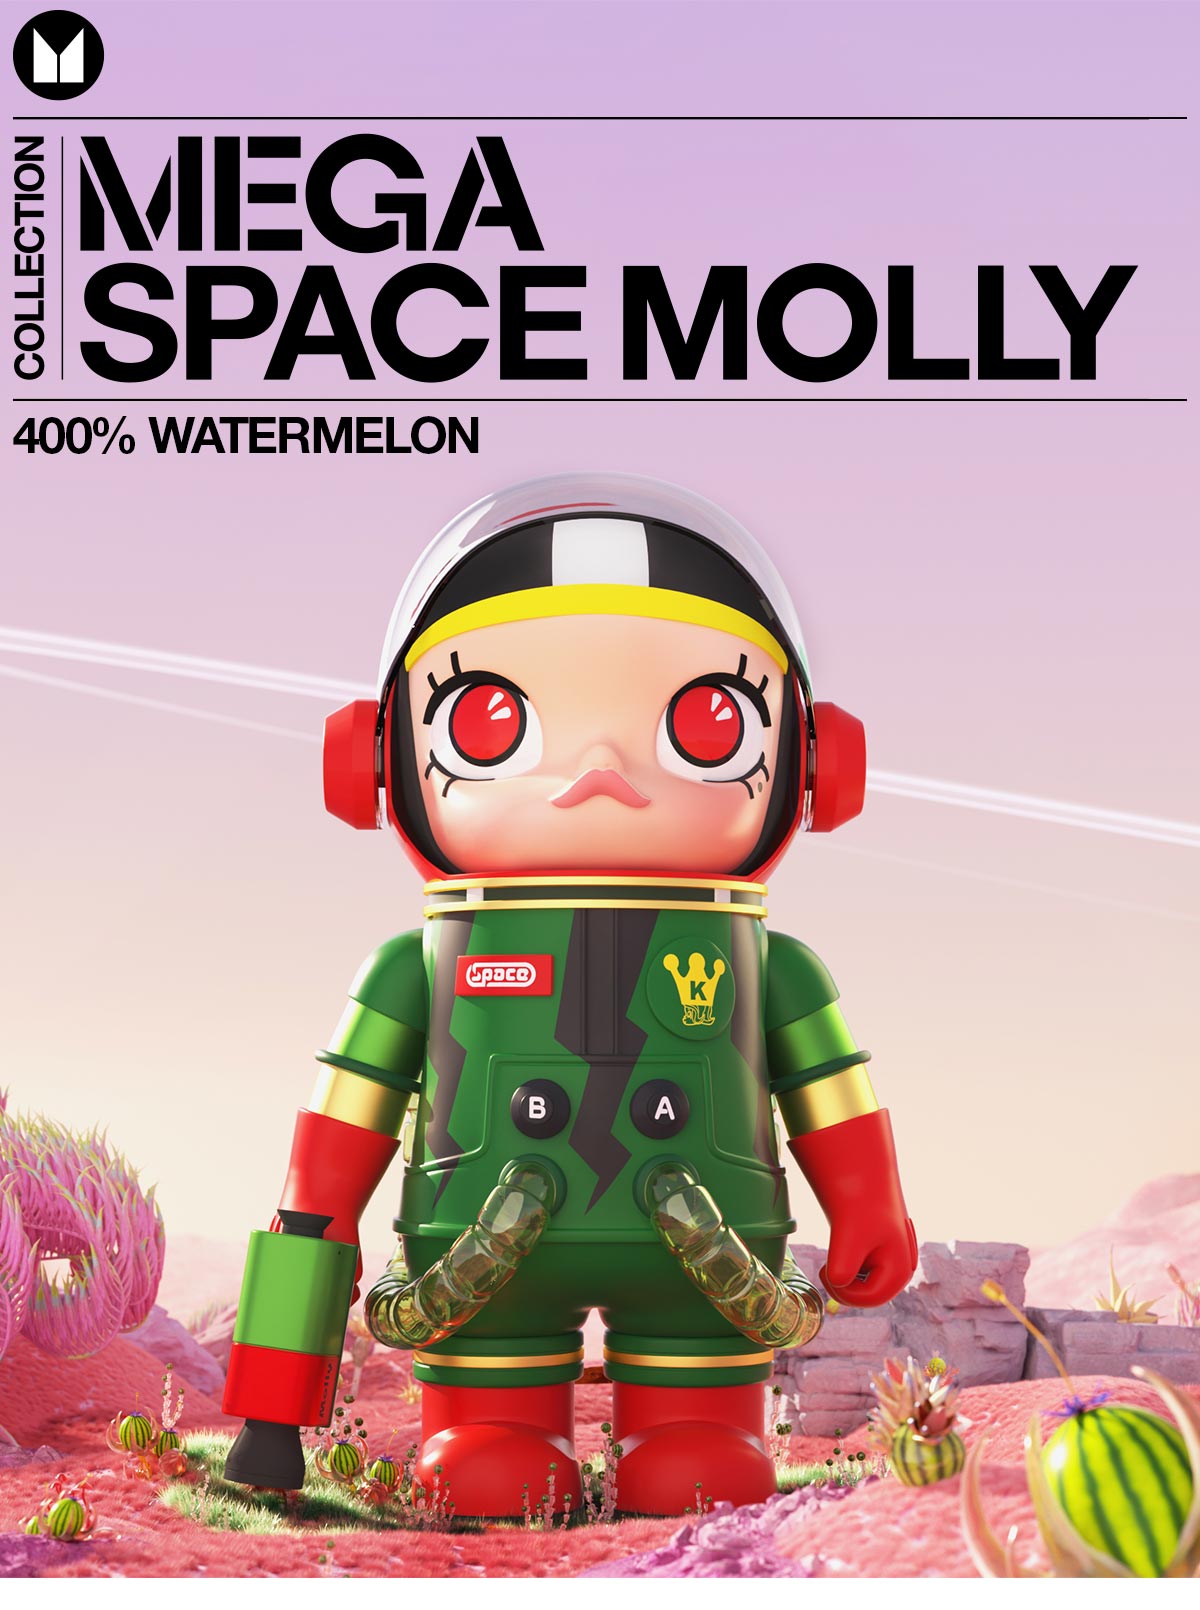 MEGA COLLECTION 400% SPACE MOLLY Watermelon - Mega 400% - POP MART